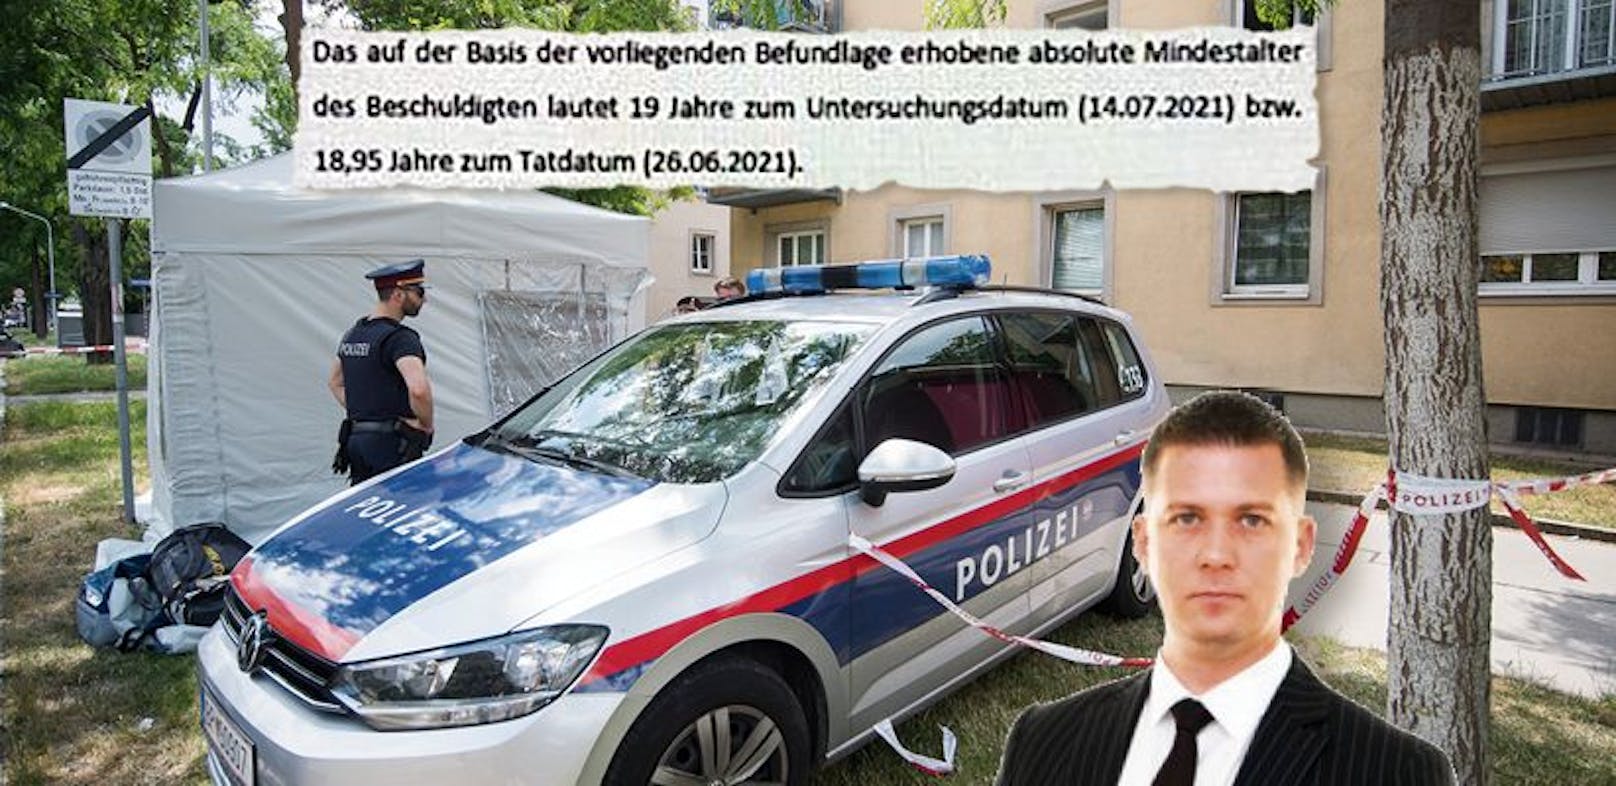 Anwalt Mathias Burger; Ausschnitt aus Befund; Tatort in Wien